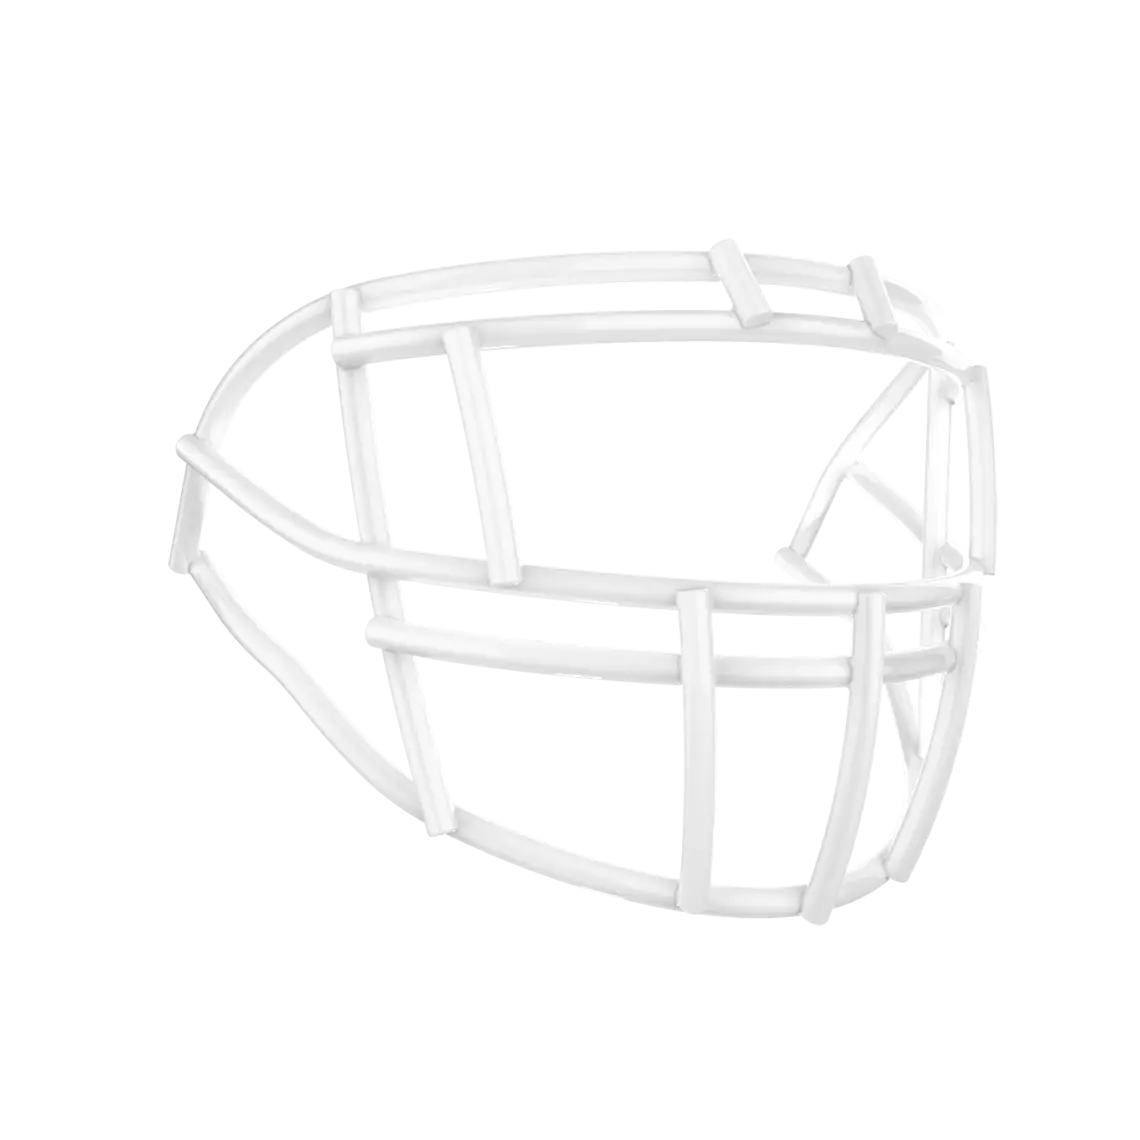 Navy XRS-22SX face mask for football helmet.